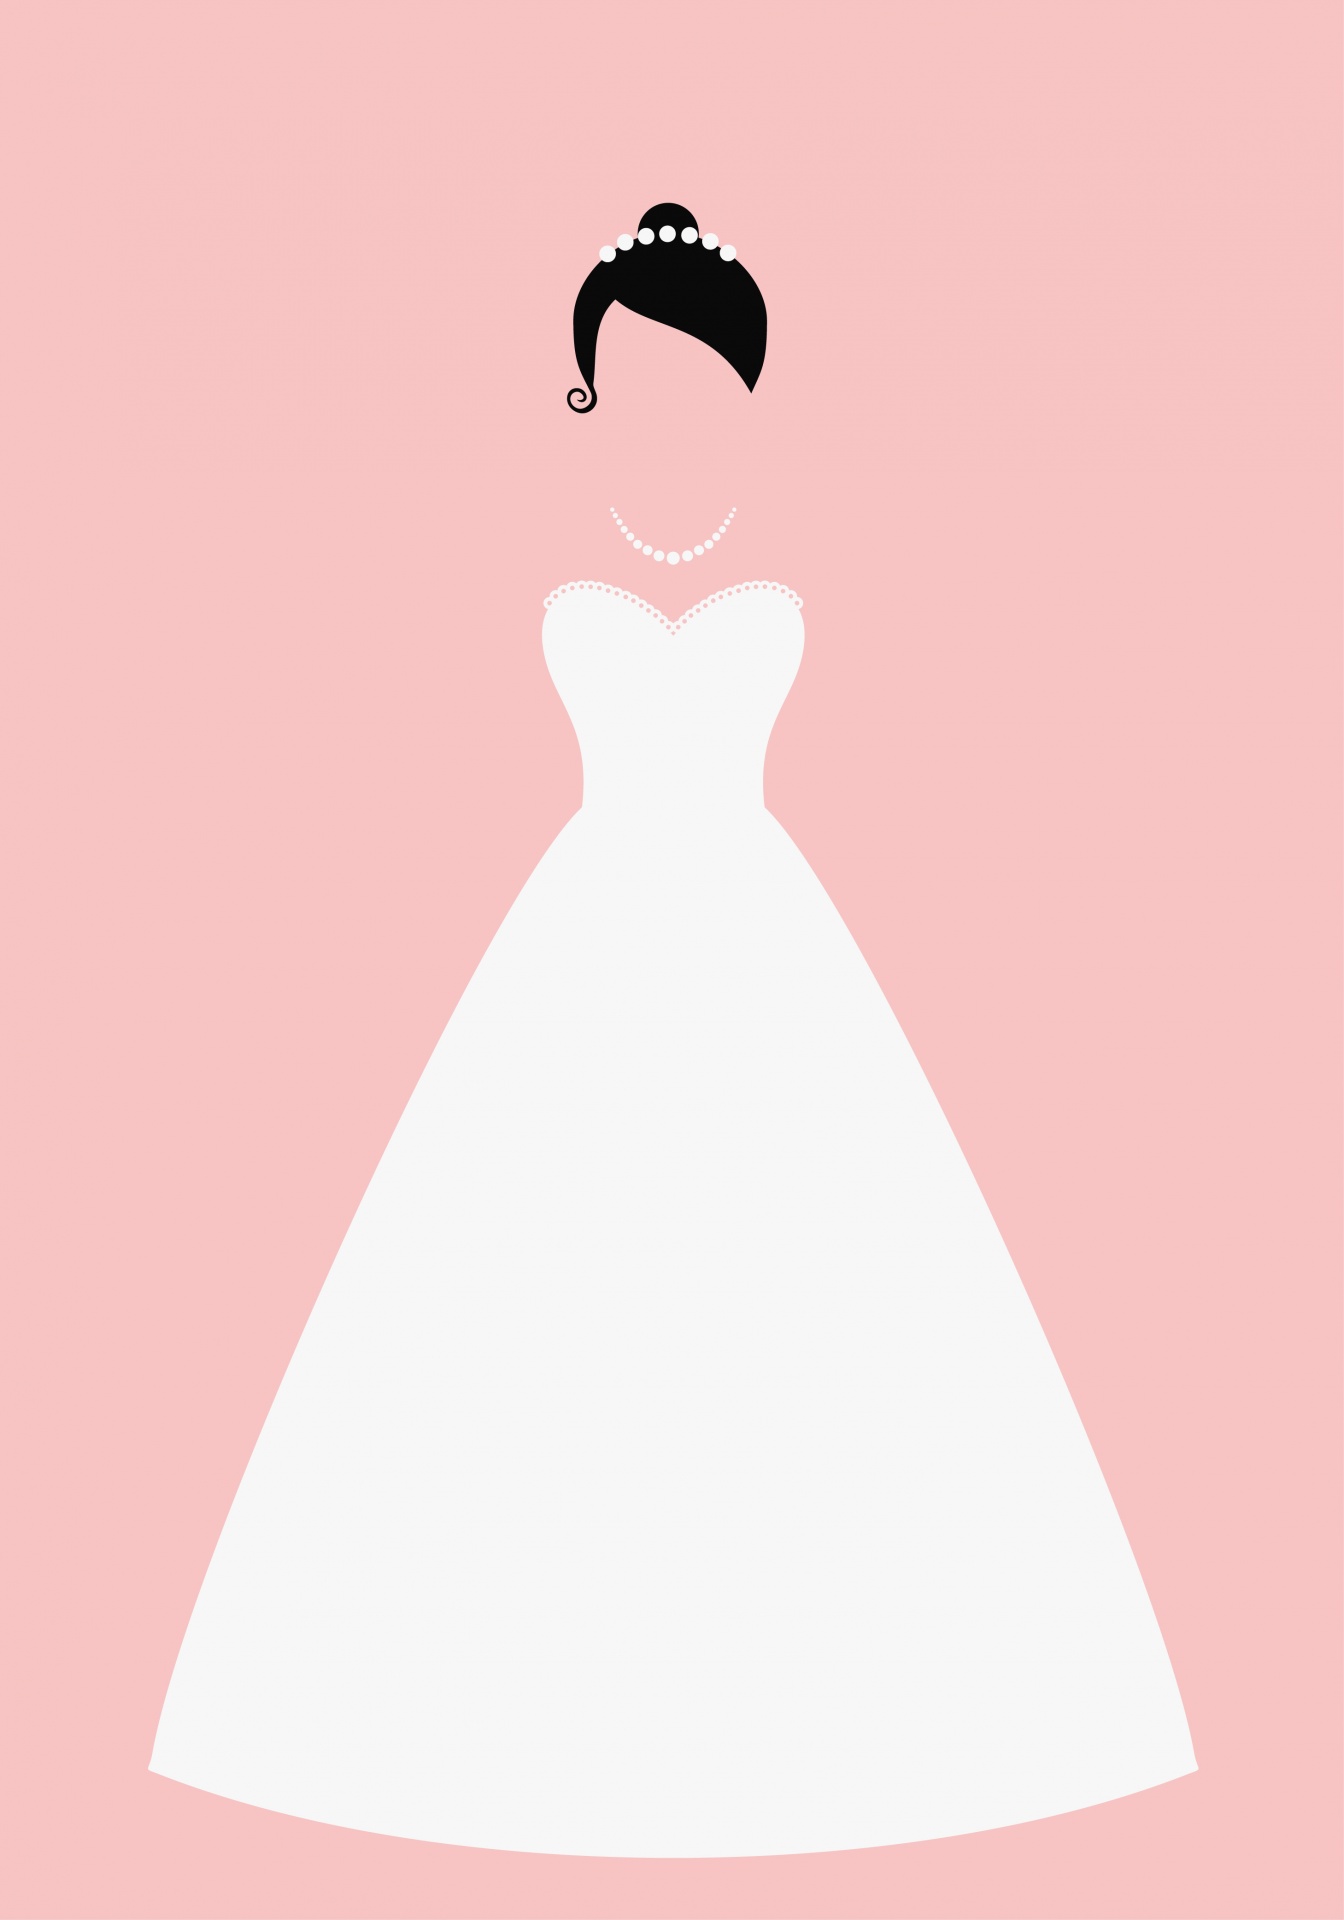 bride-wedding-dress-illustration-free-stock-photo-public-domain-pictures